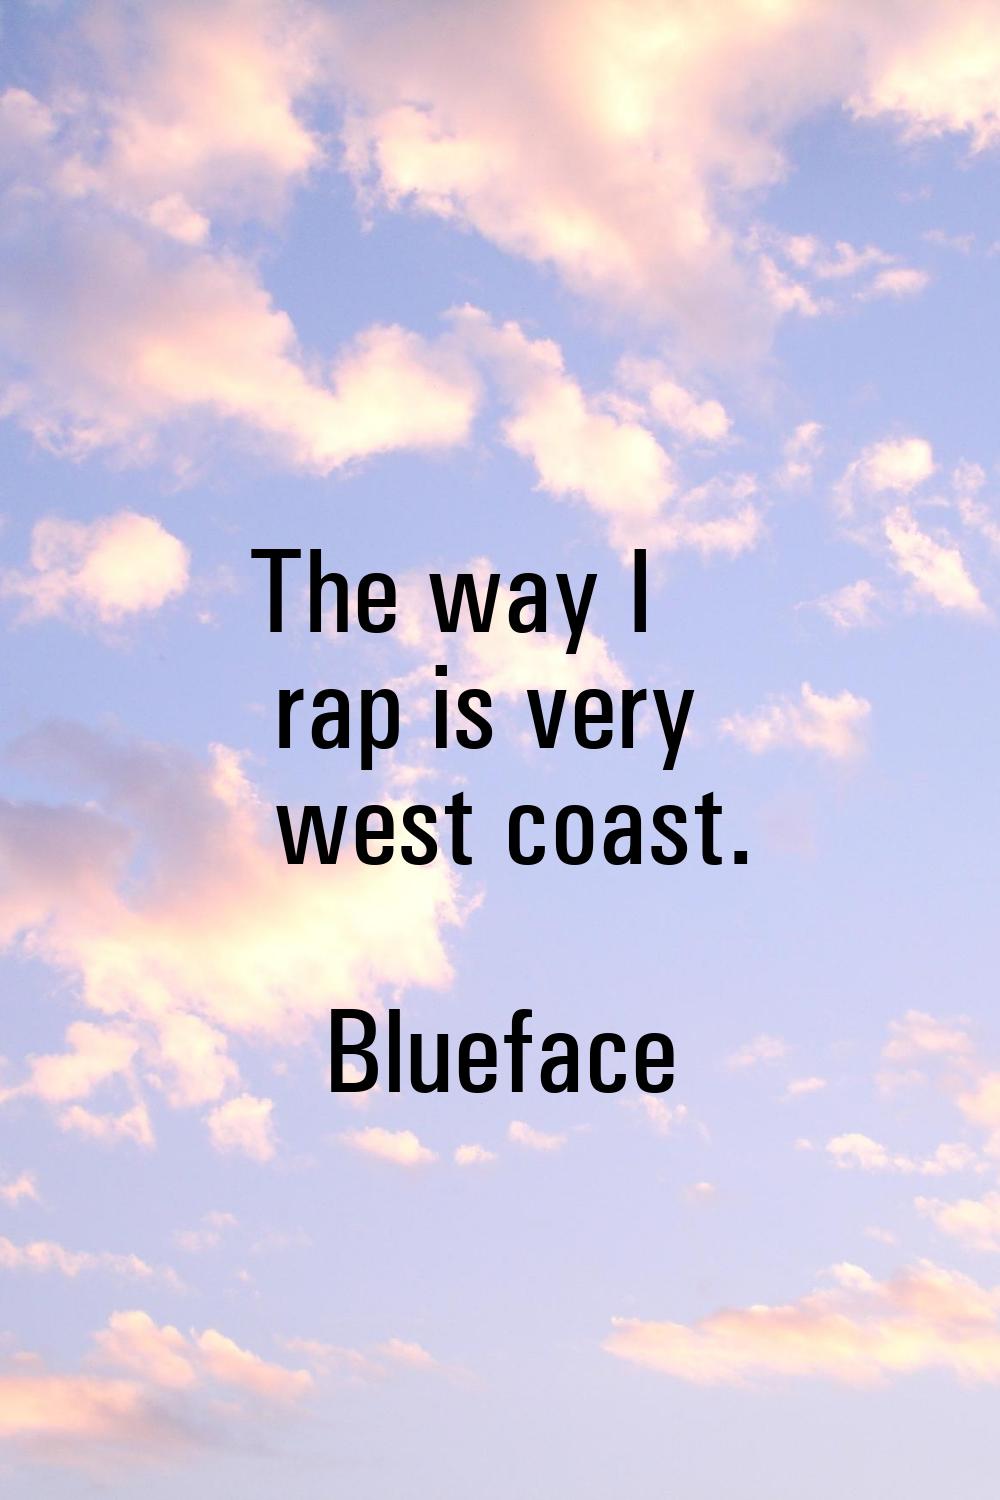 The way I rap is very west coast.